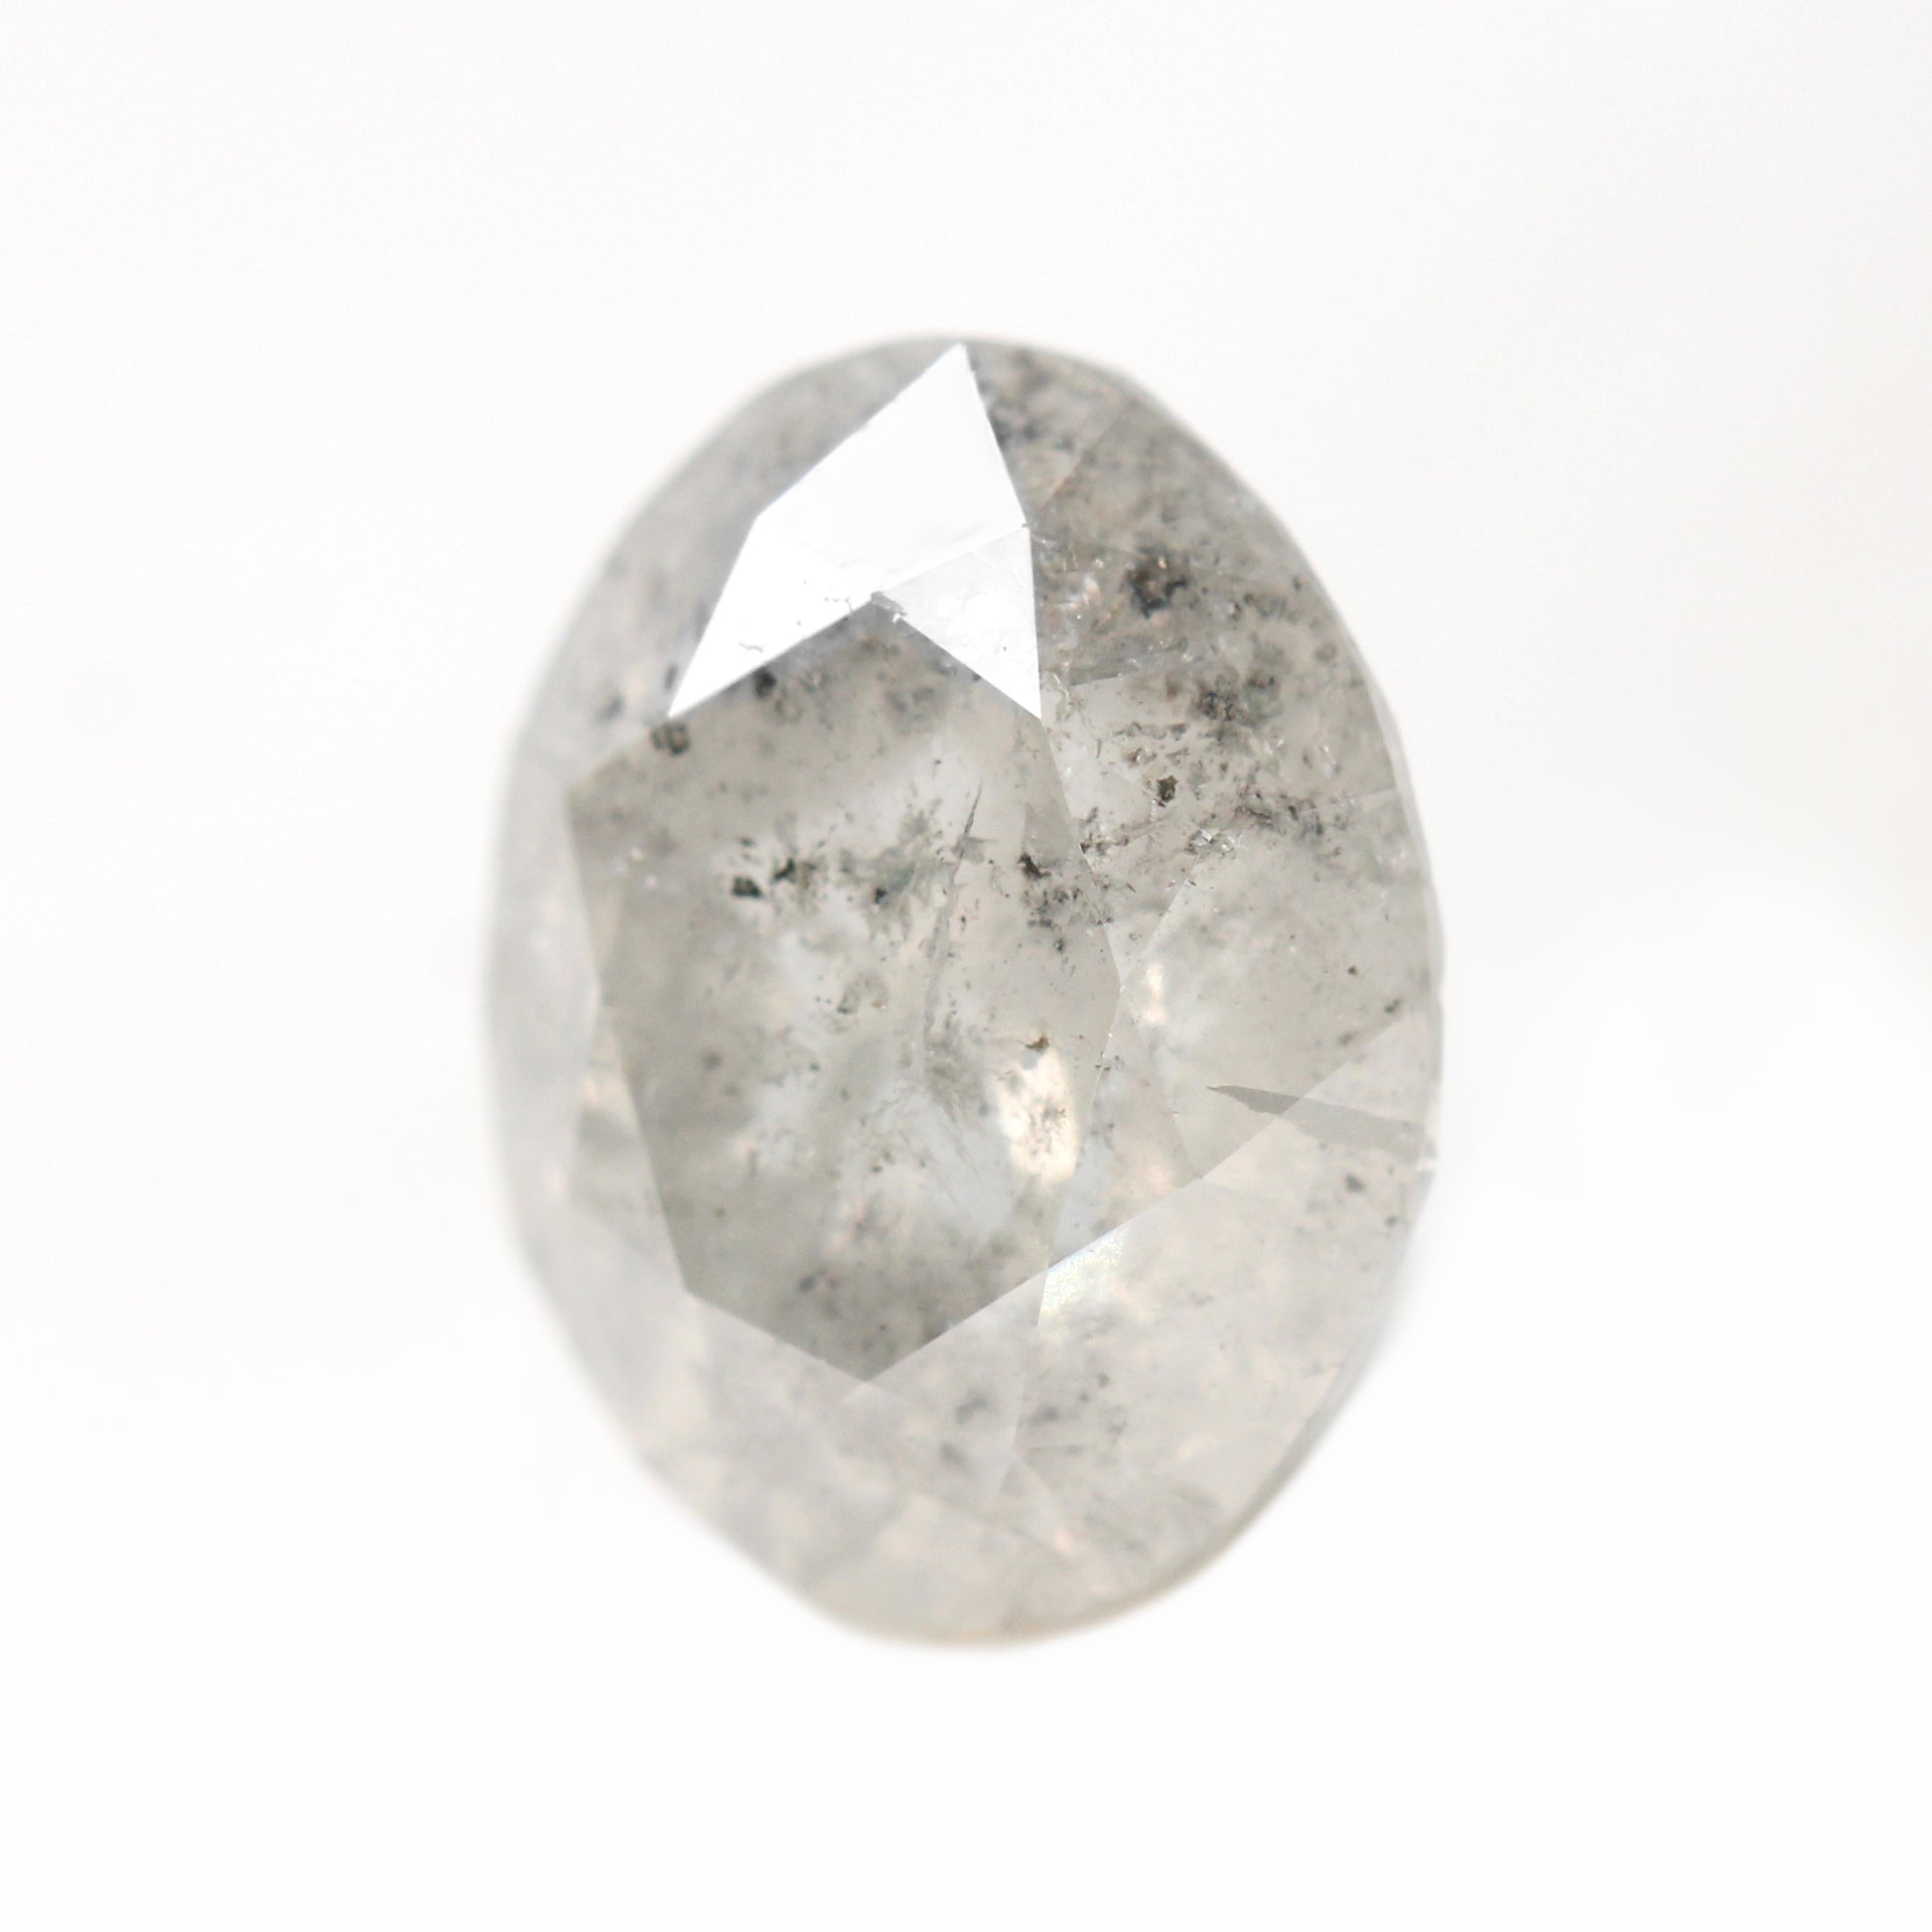 1.95 Carat Light Gray Oval Celestial Diamond for Custom Work - Inventory Code SGO195 - Midwinter Co. Alternative Bridal Rings and Modern Fine Jewelry